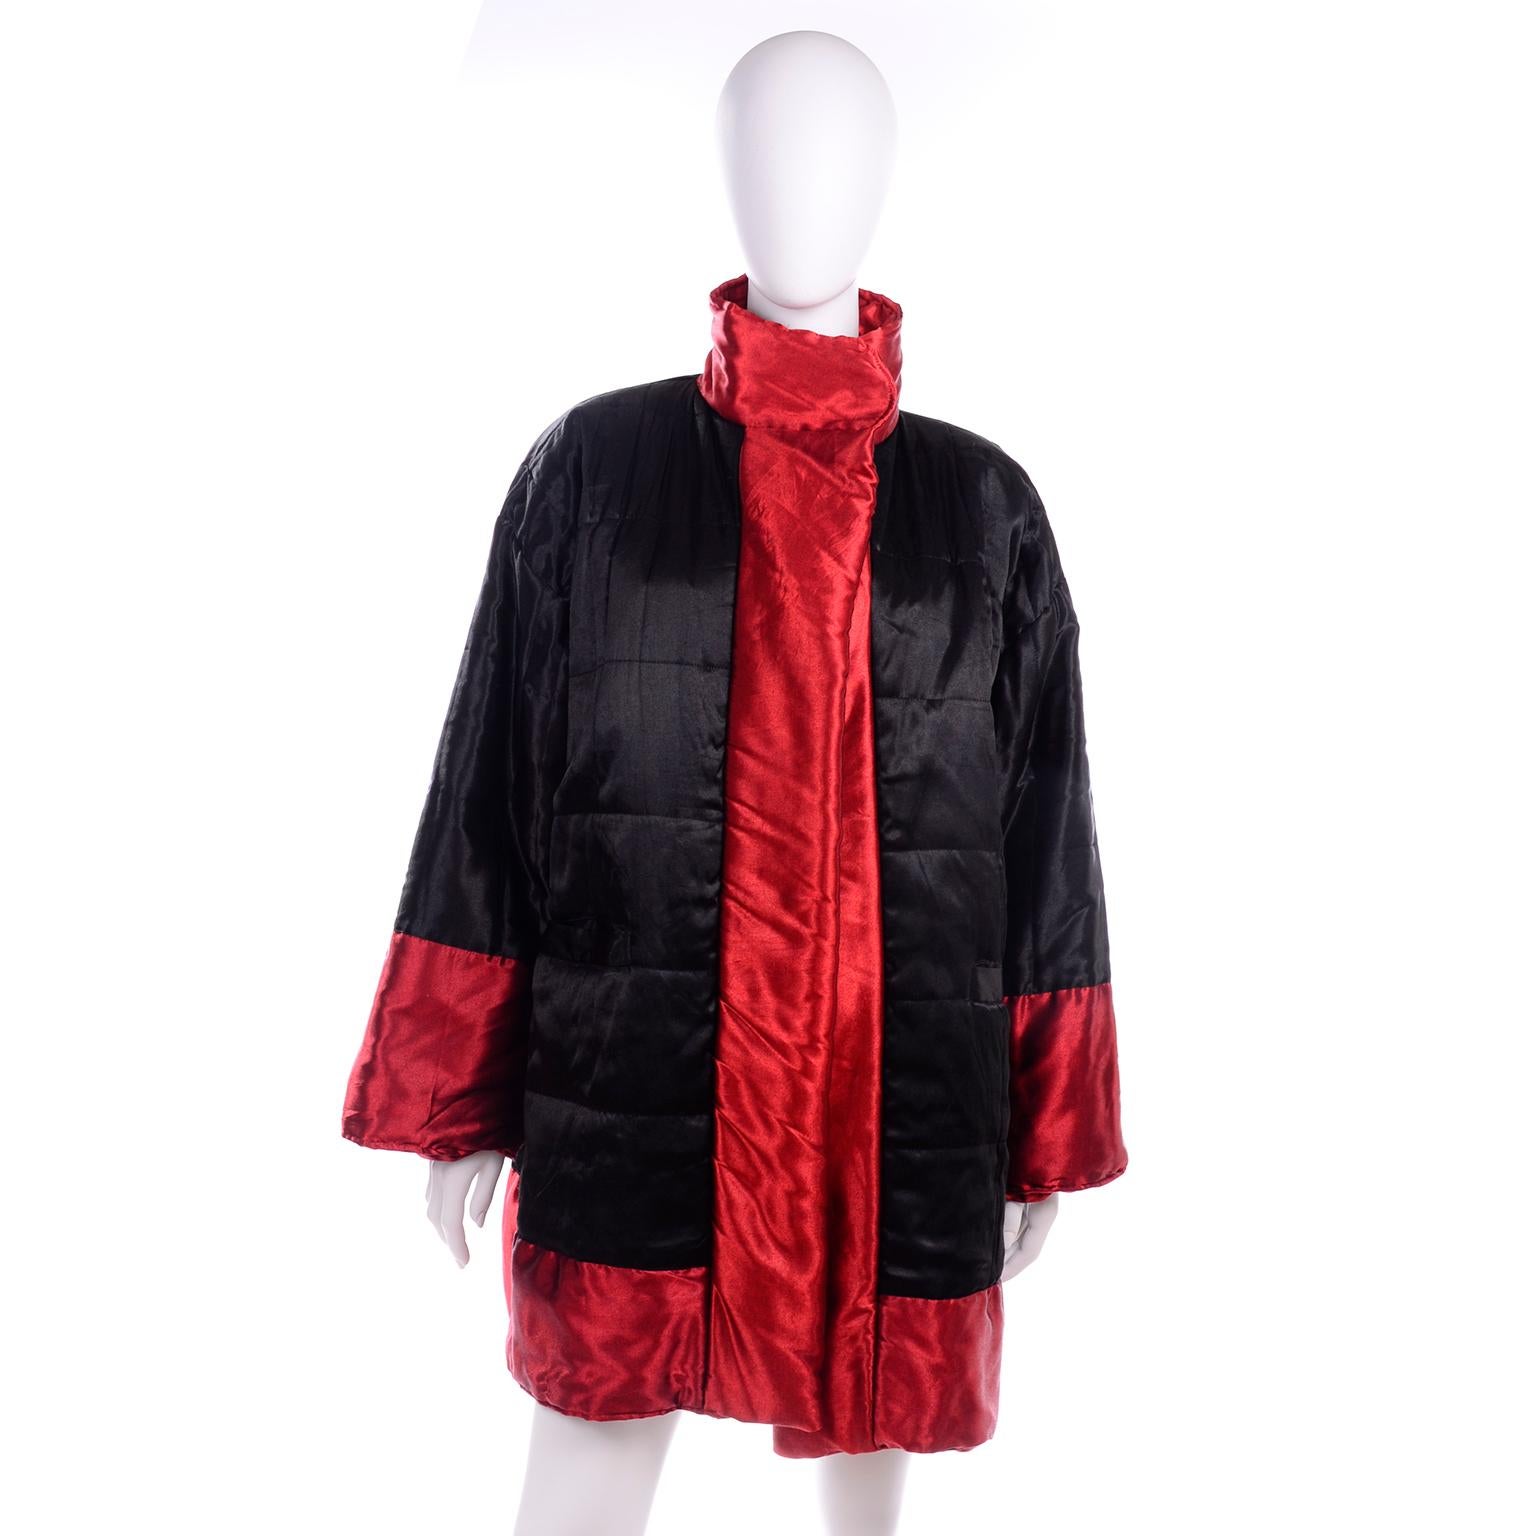 Women's 1980s Neiman Marcus Colorful Reversible Jacket Vintage Rainbow Satin Coat